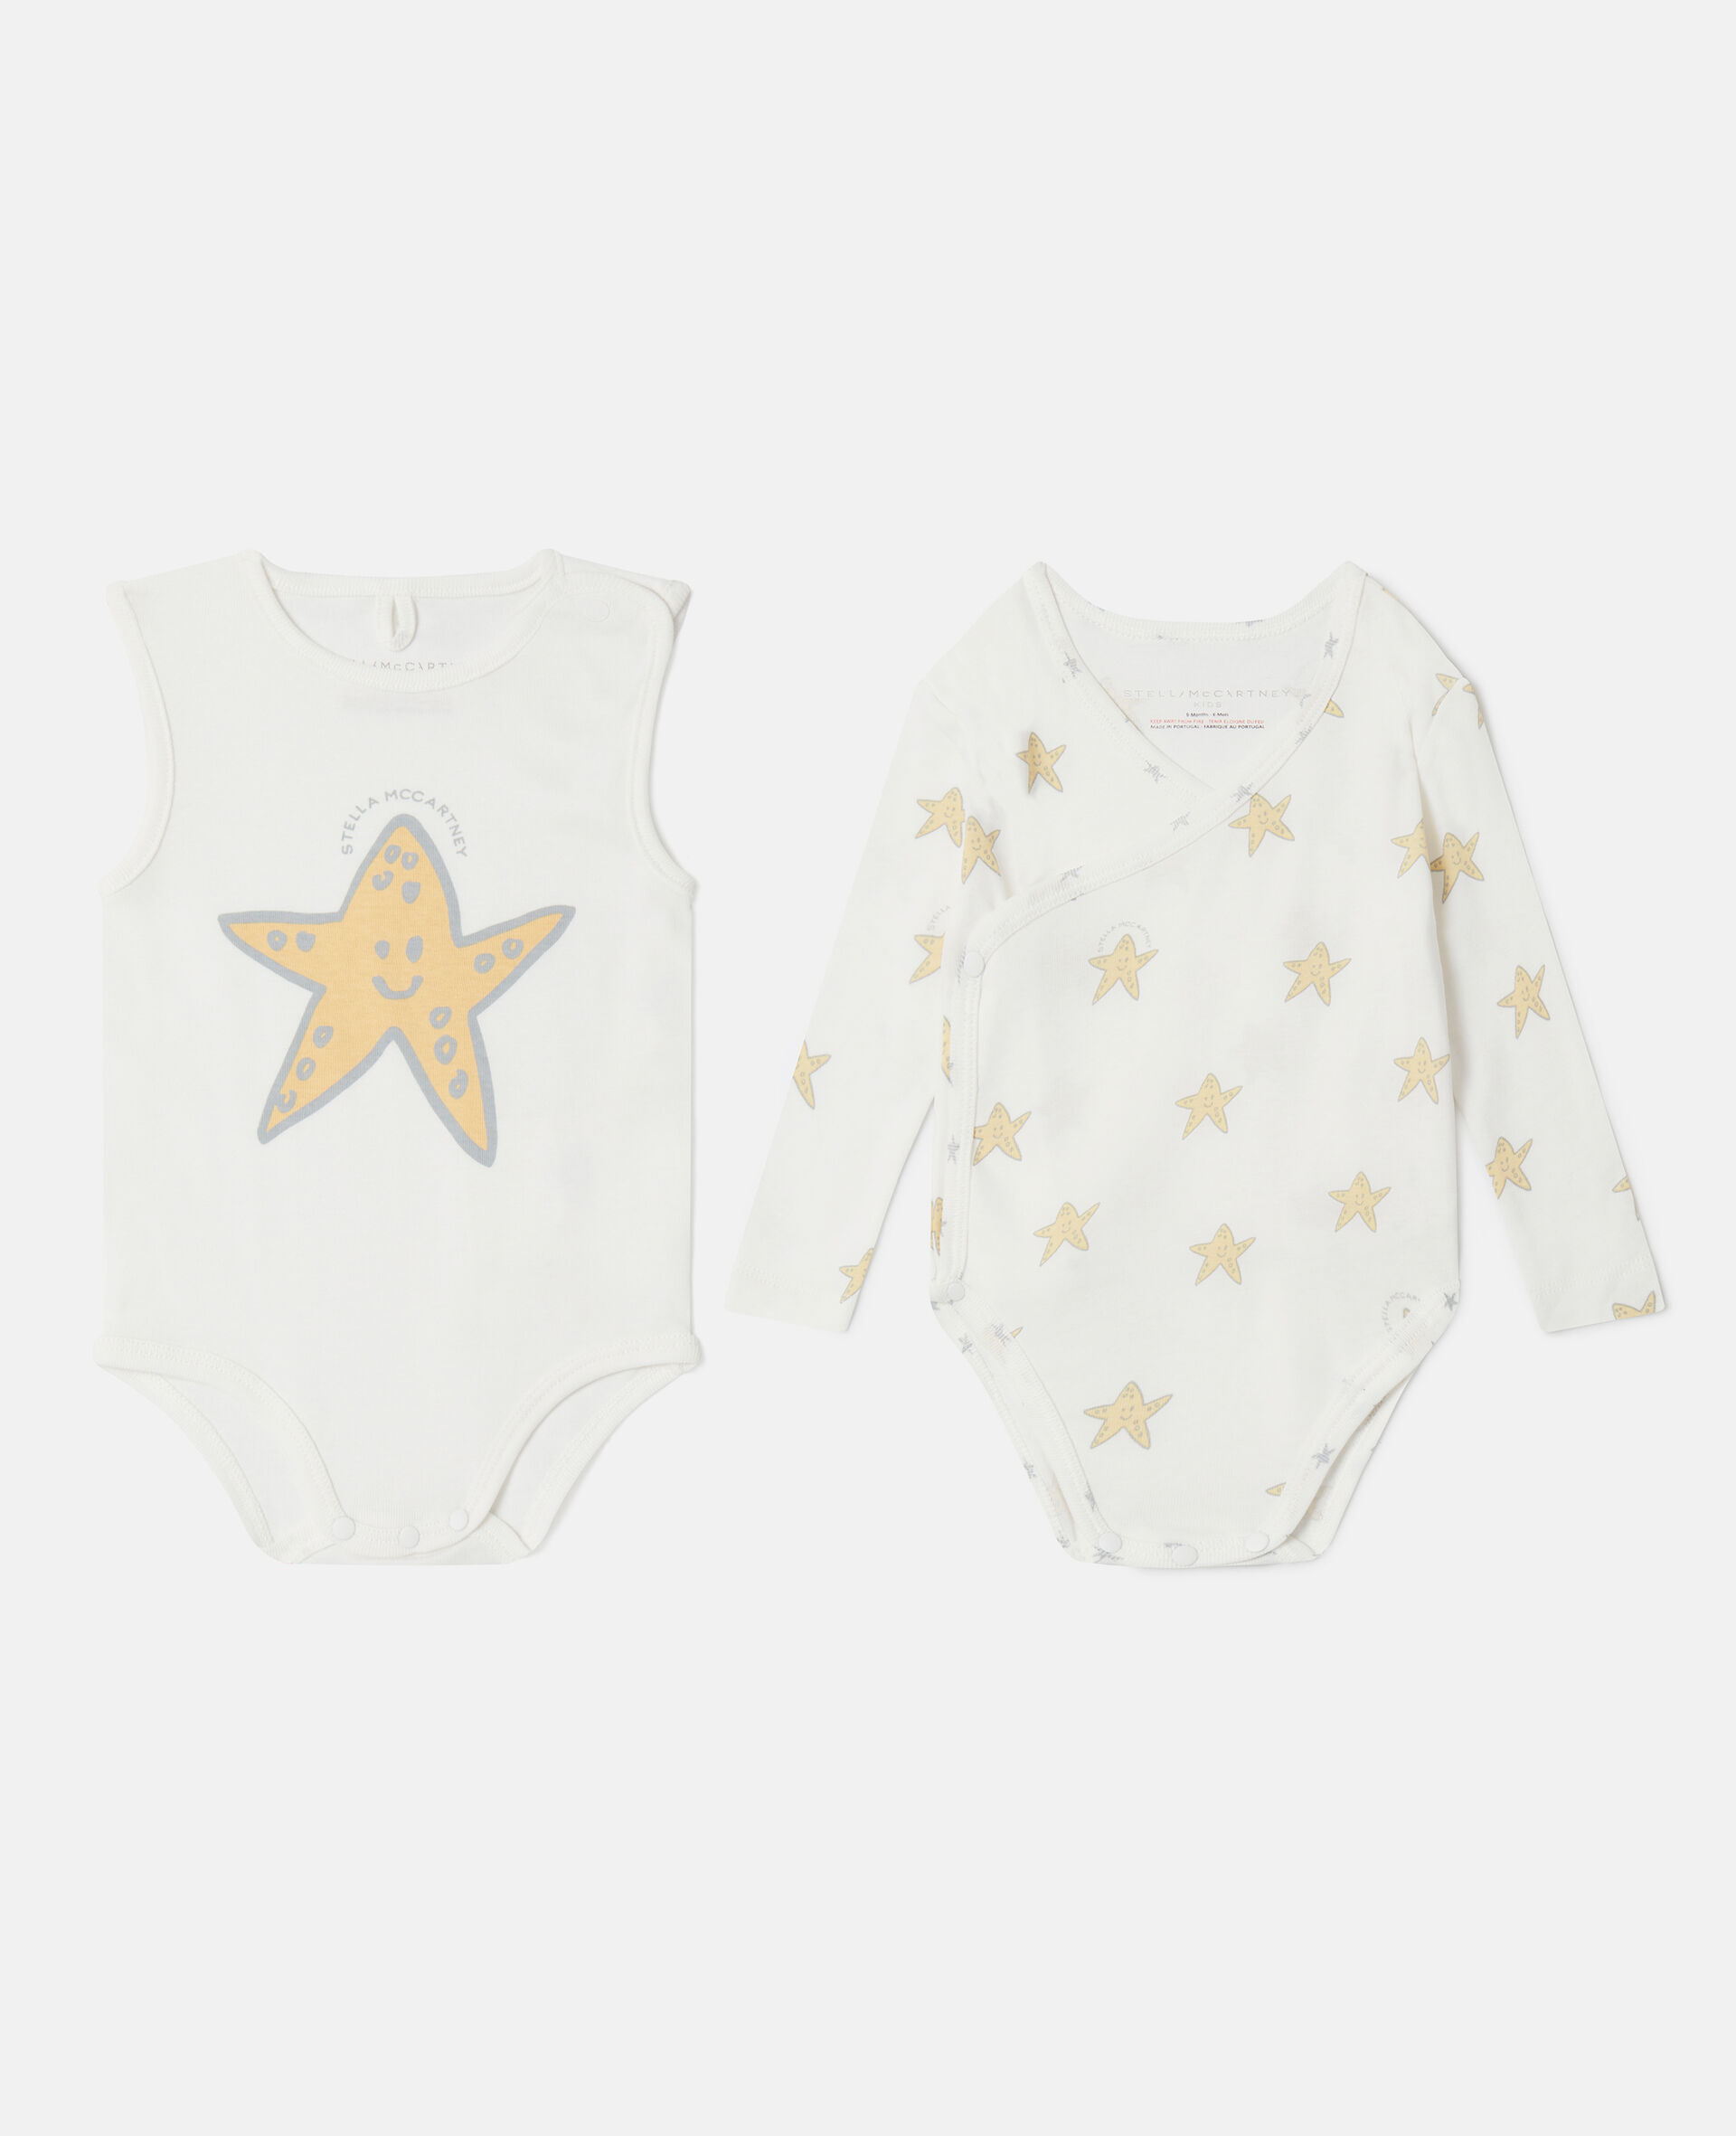 Smiling Stella Star Print Bodysuit and Sleepsuit Set-멀티컬러-large image number 0